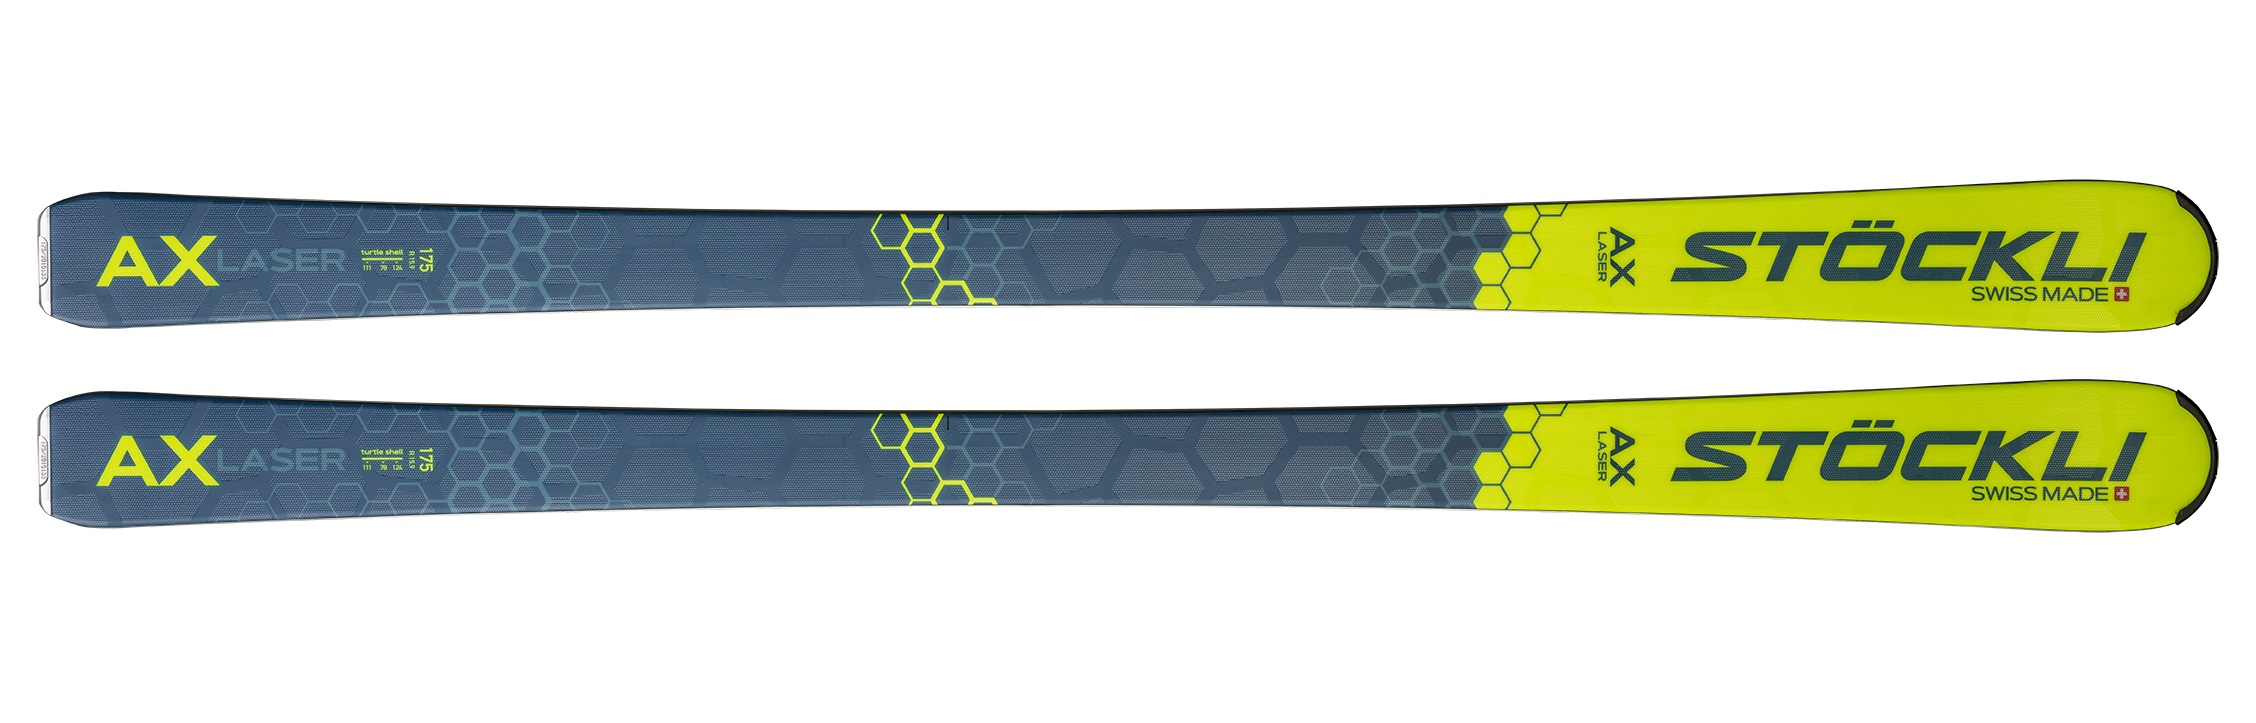 Горные лыжи Stockli Laser AX + Attack 13 AT 2022 blue/yellow, 182 см